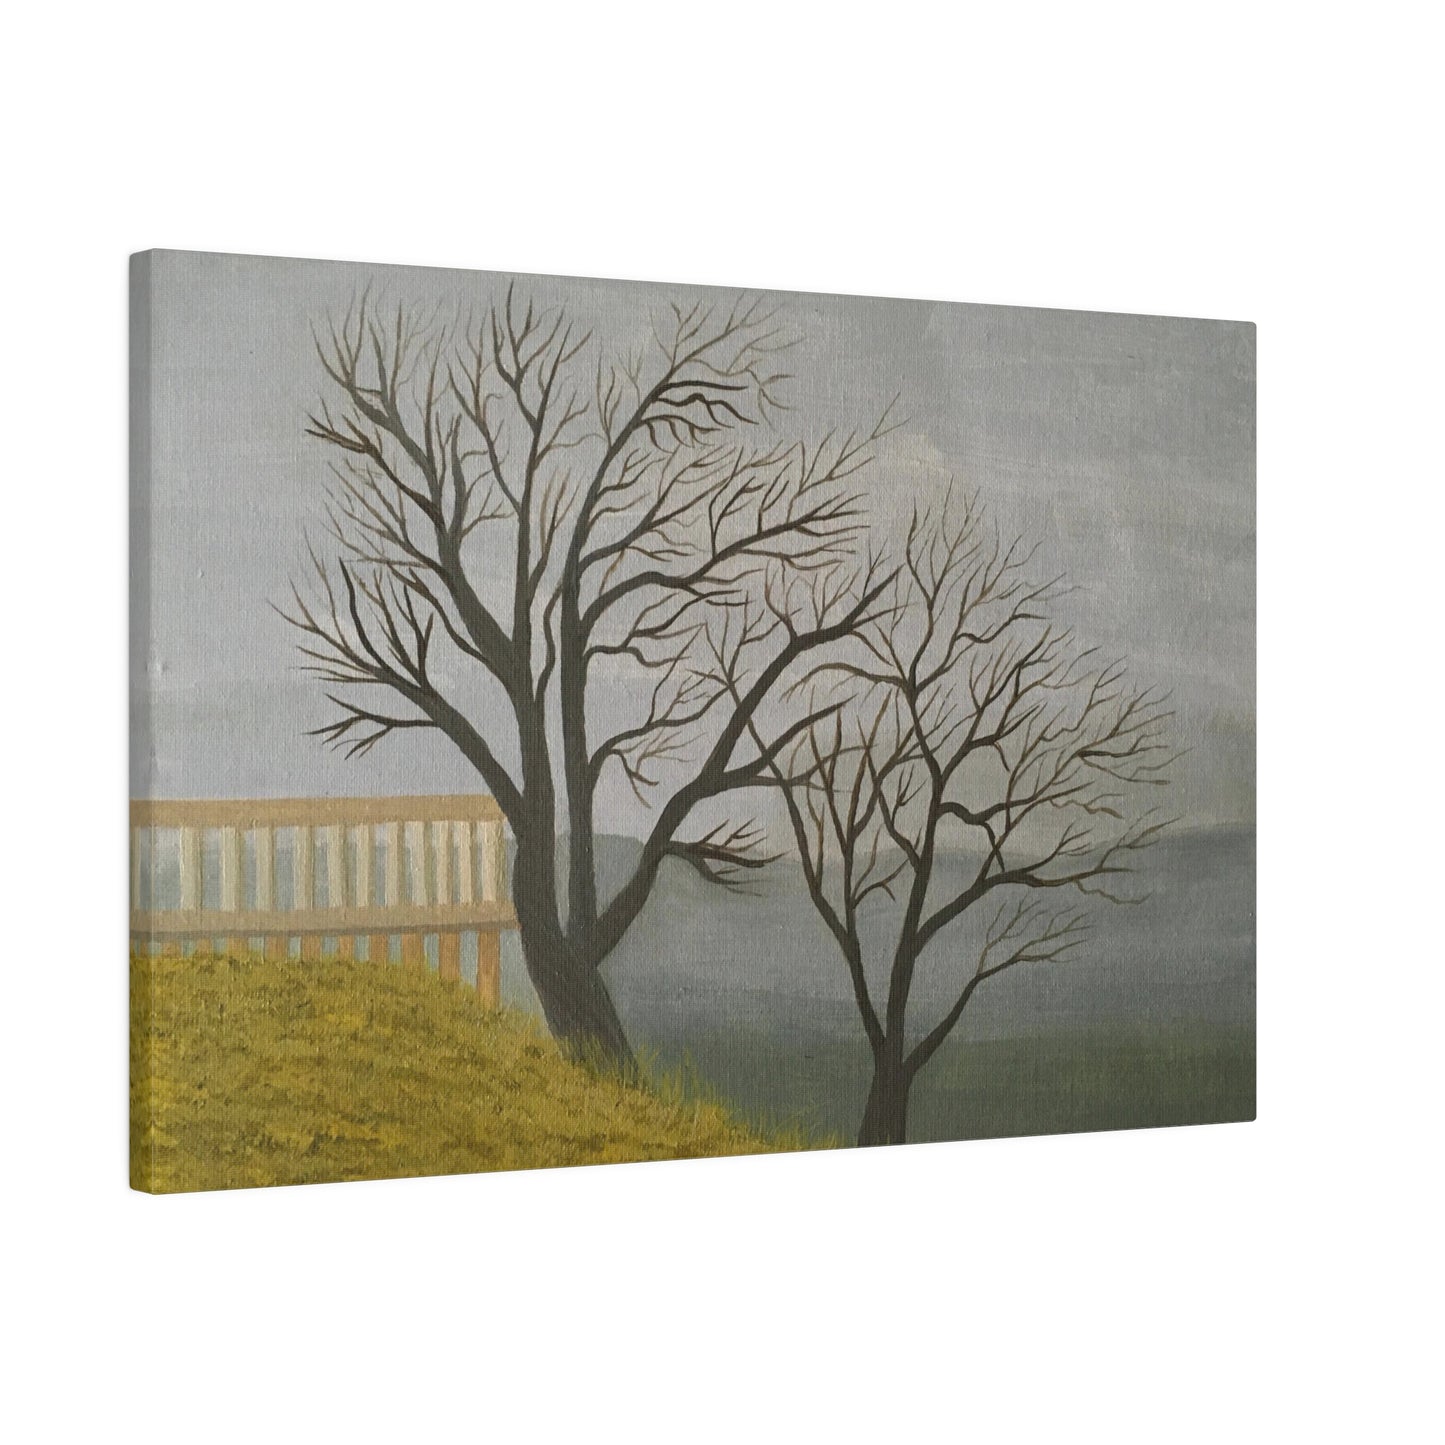 Receding Fog.  Painting Print on canvas.